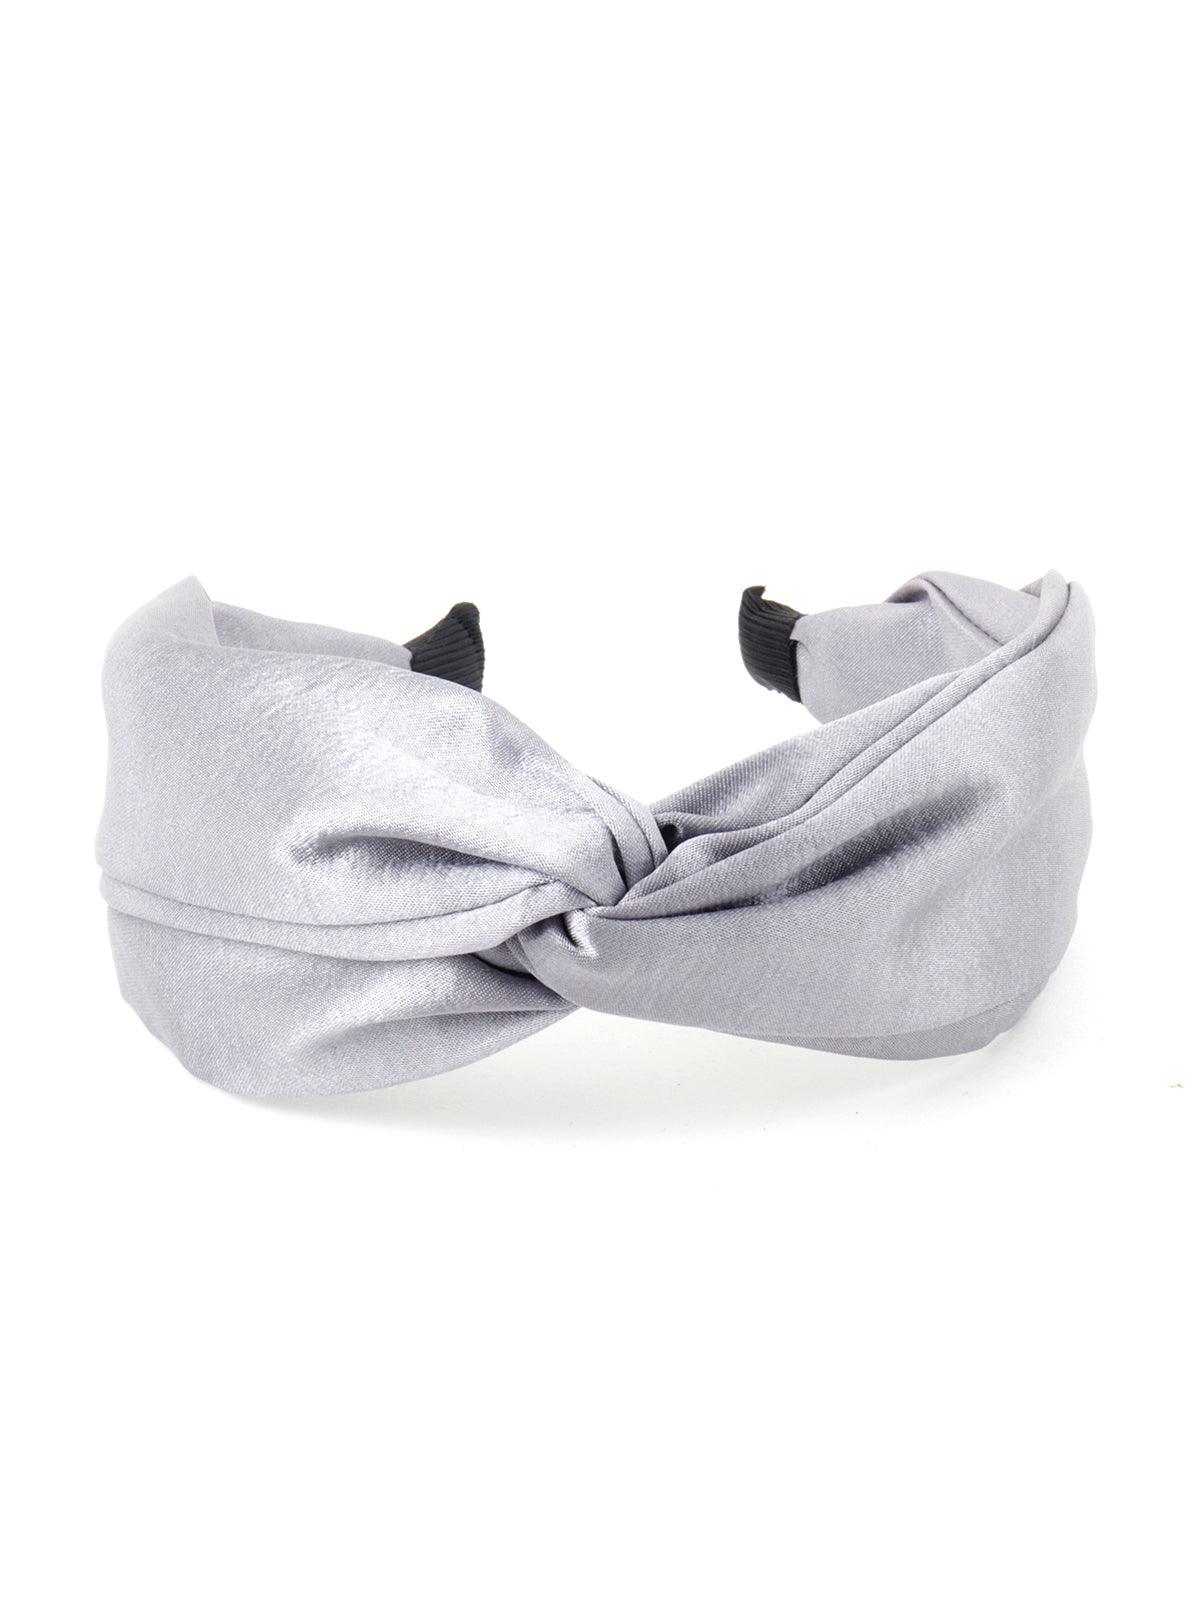 Grey Shiny Simple Hairband - Odette